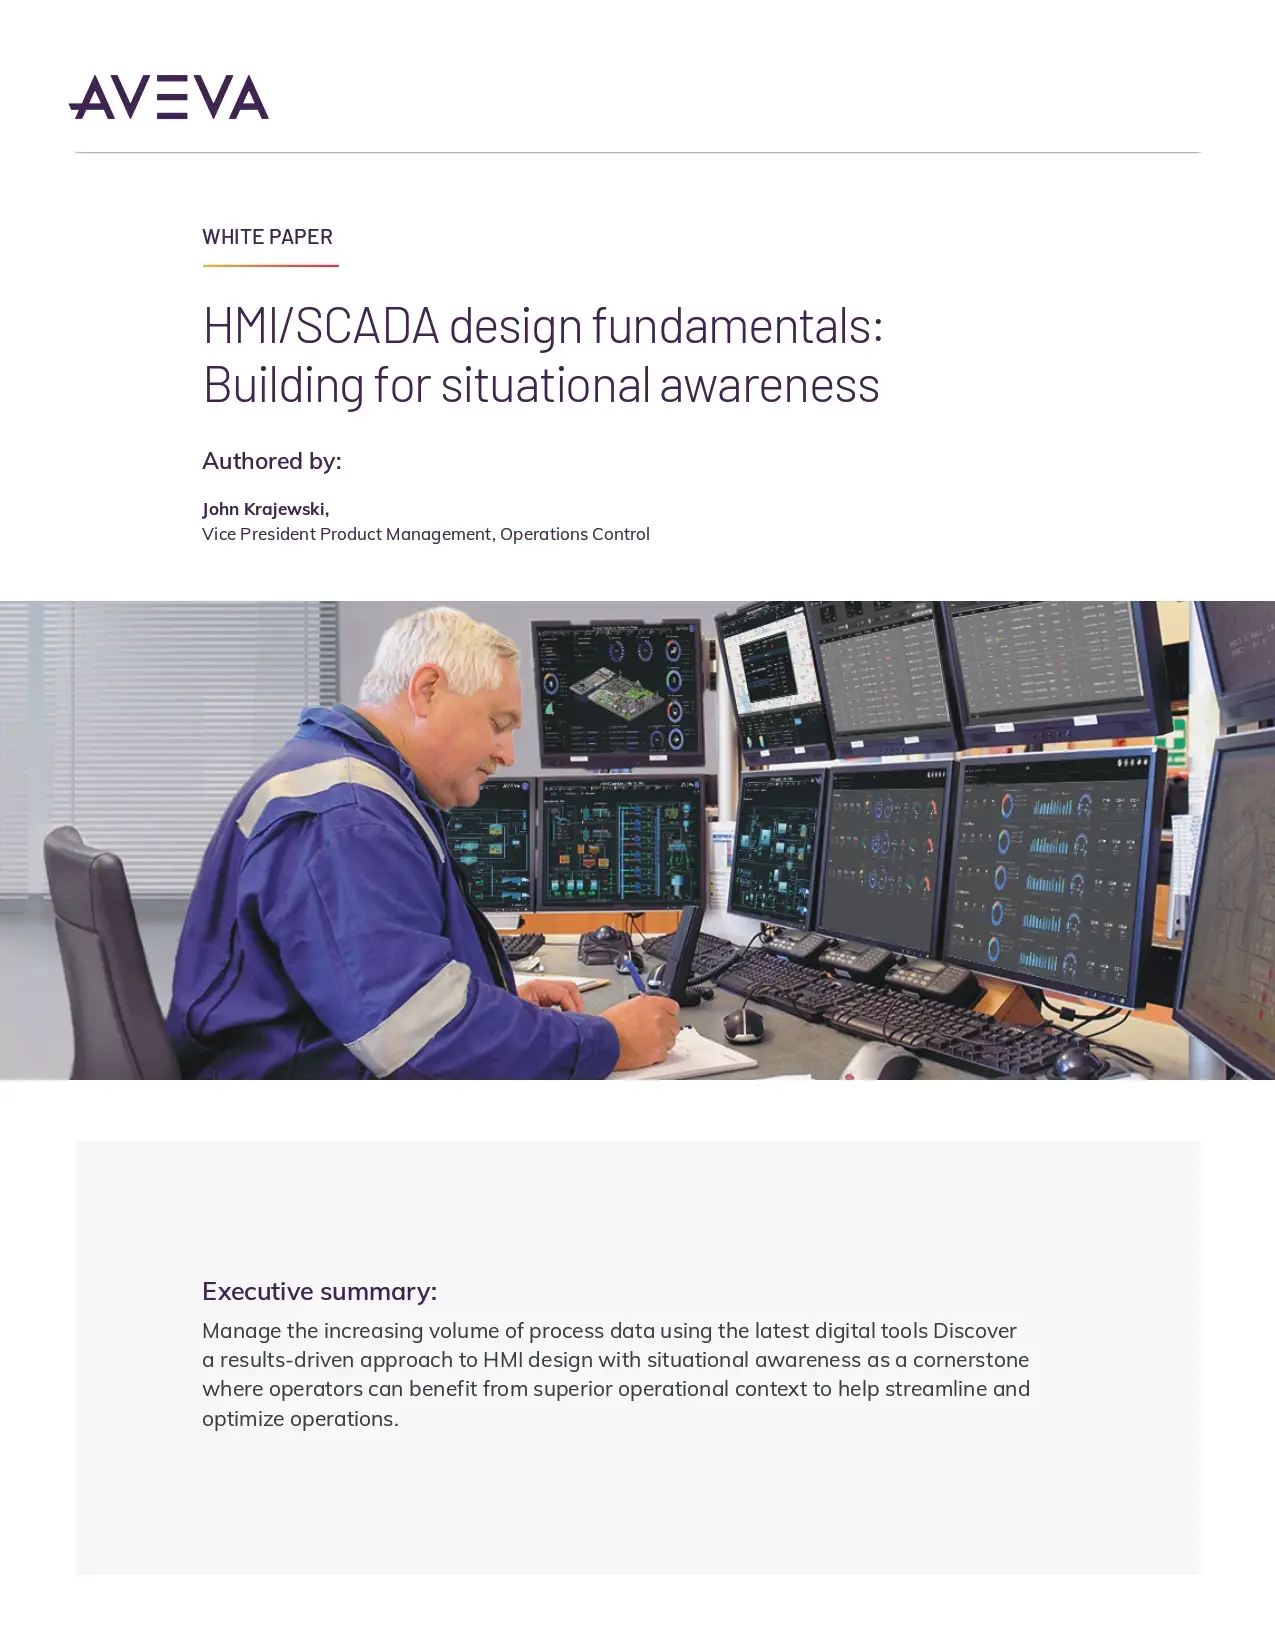 HMI/SCADA Design Fundamentals: Building For Situational Awareness